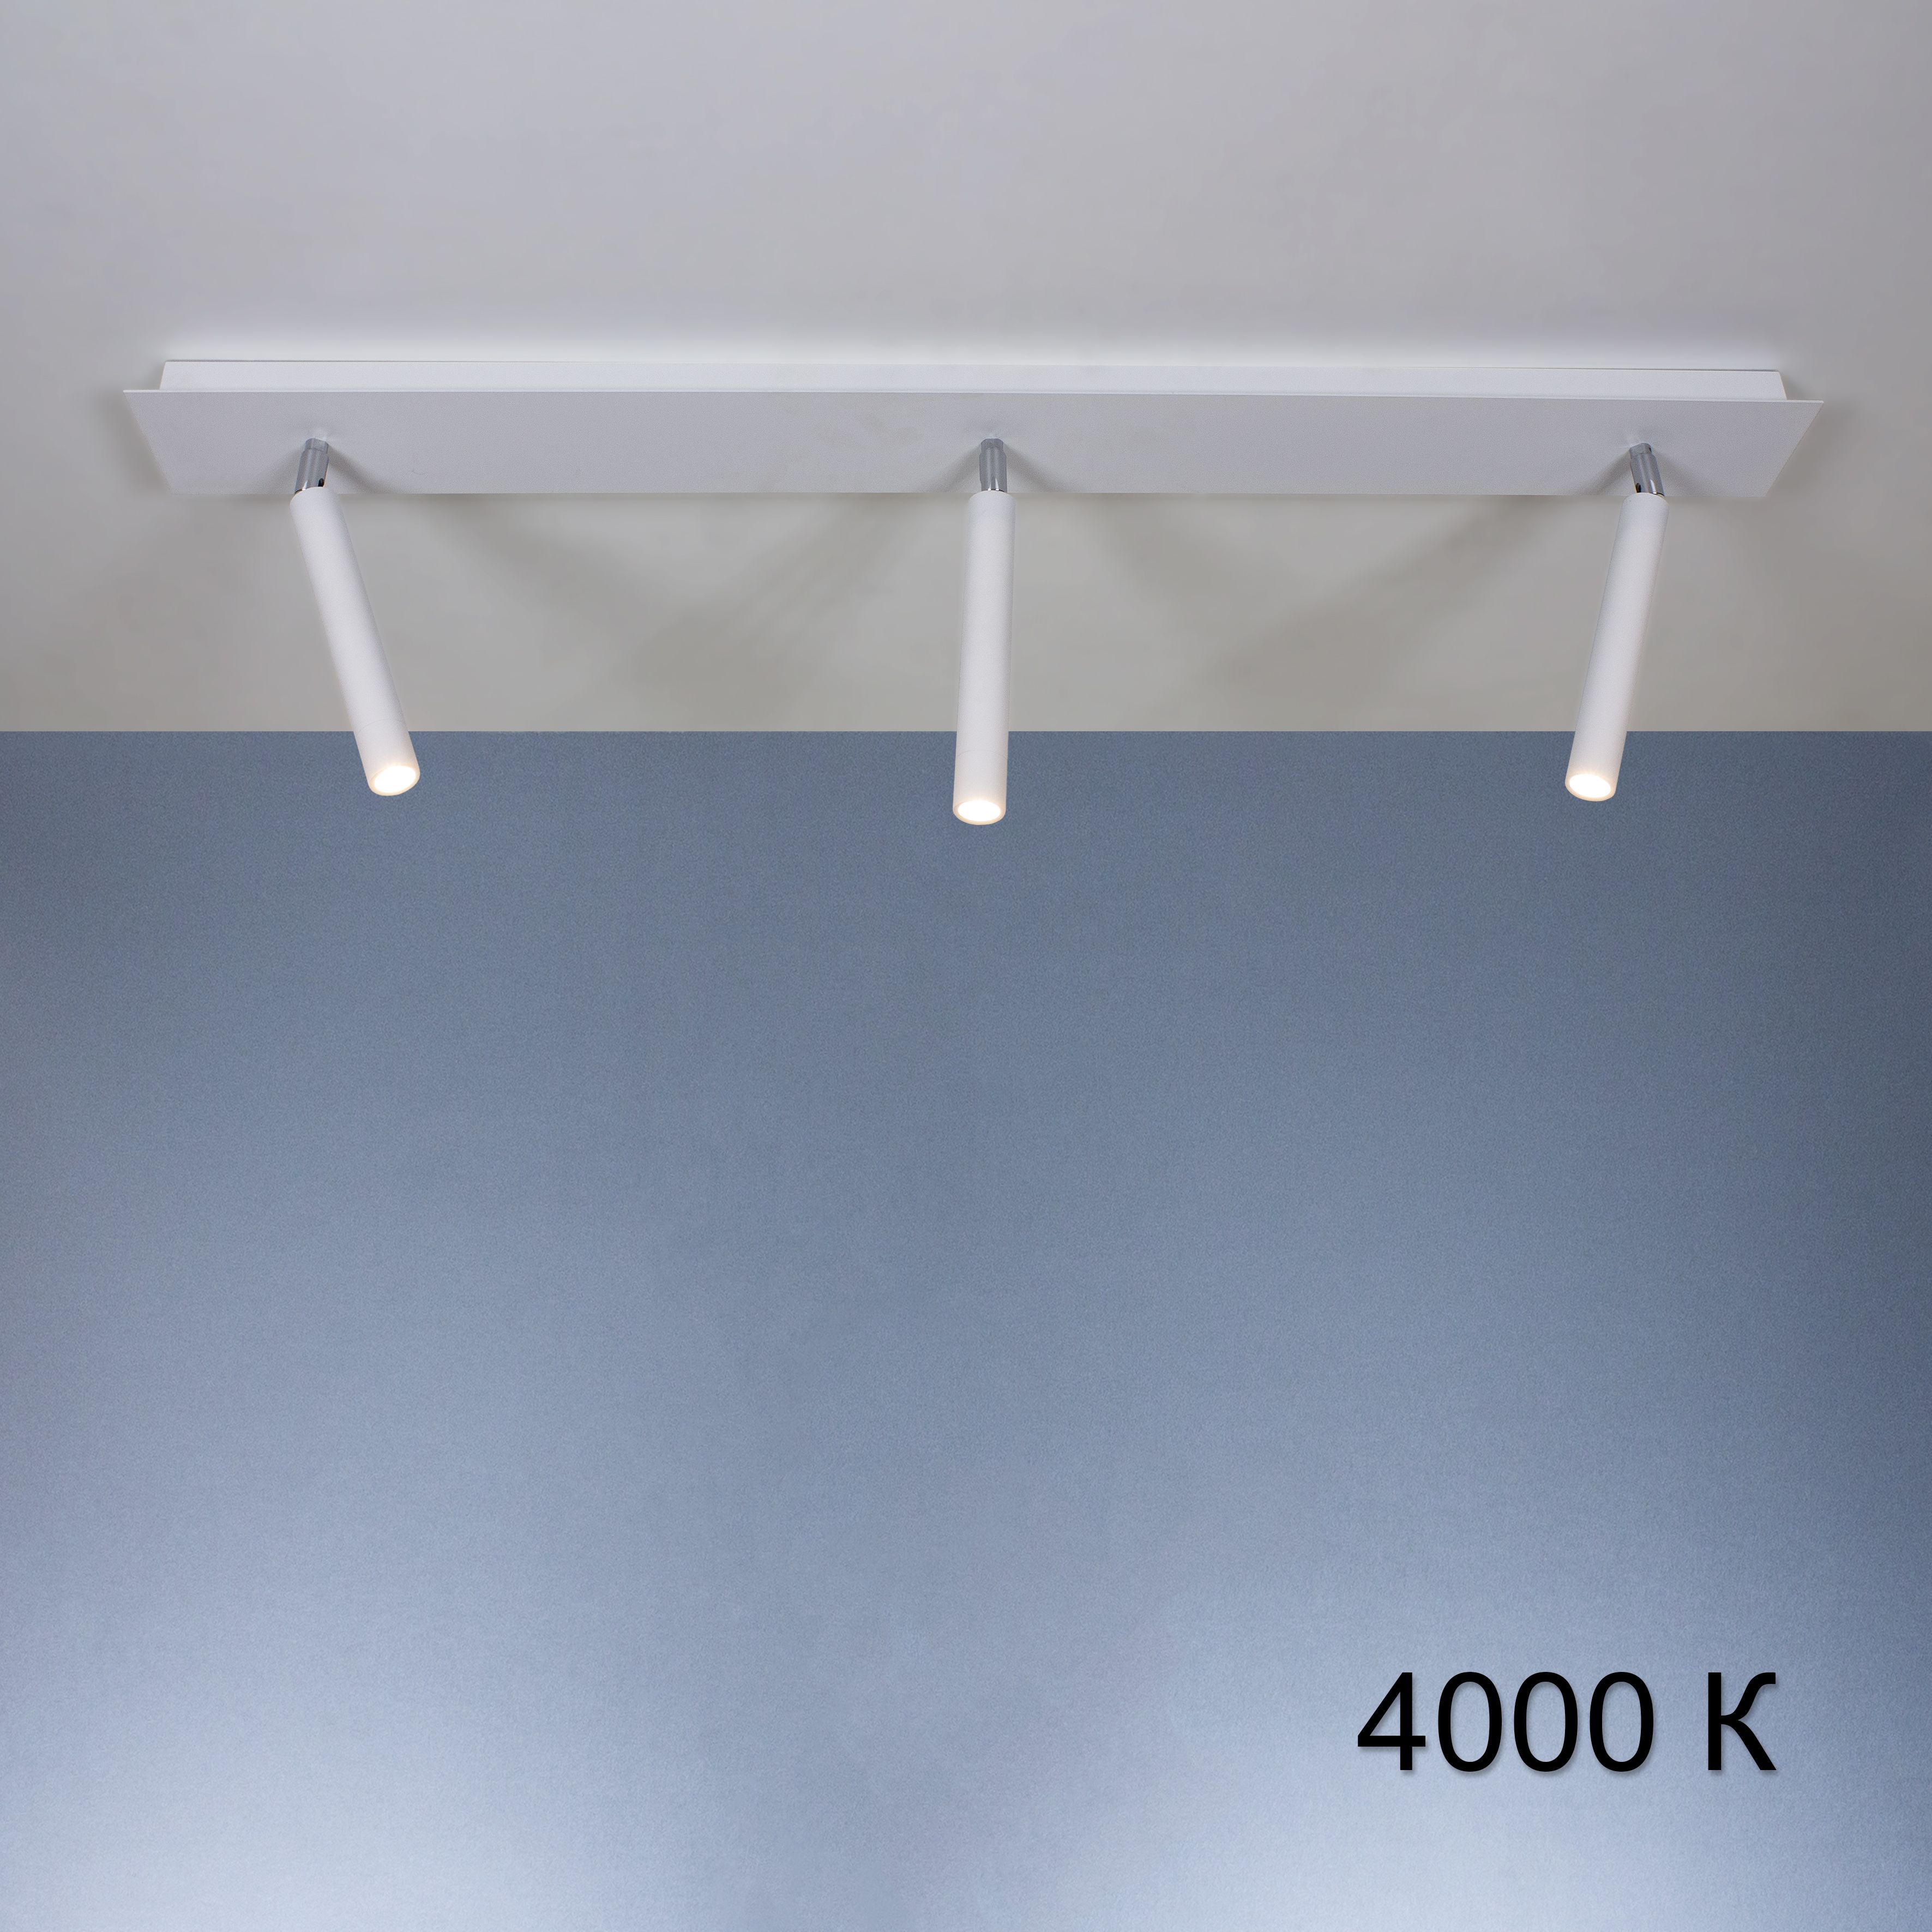 Ceiling lamp Diplomat Imperium Light 2003100.01.92 white / chrome